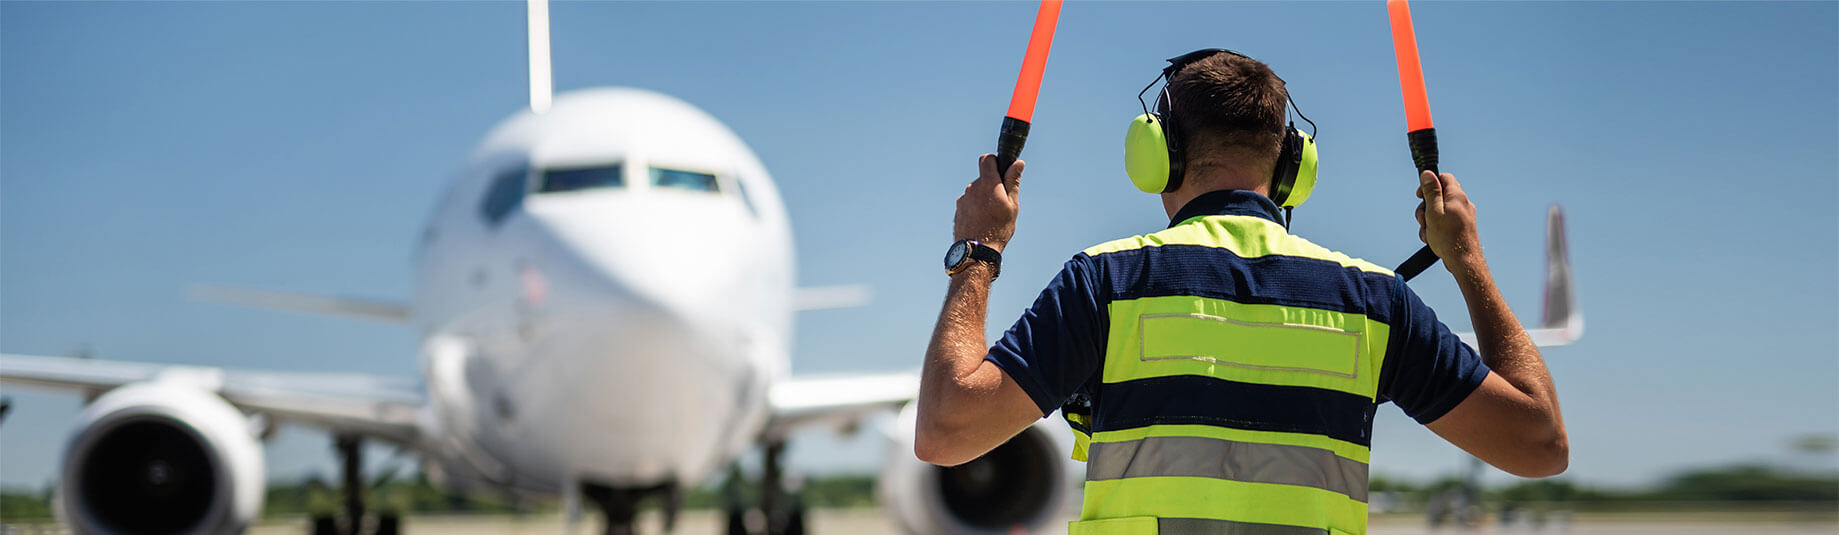 Image of airport ground crew member directing plane 